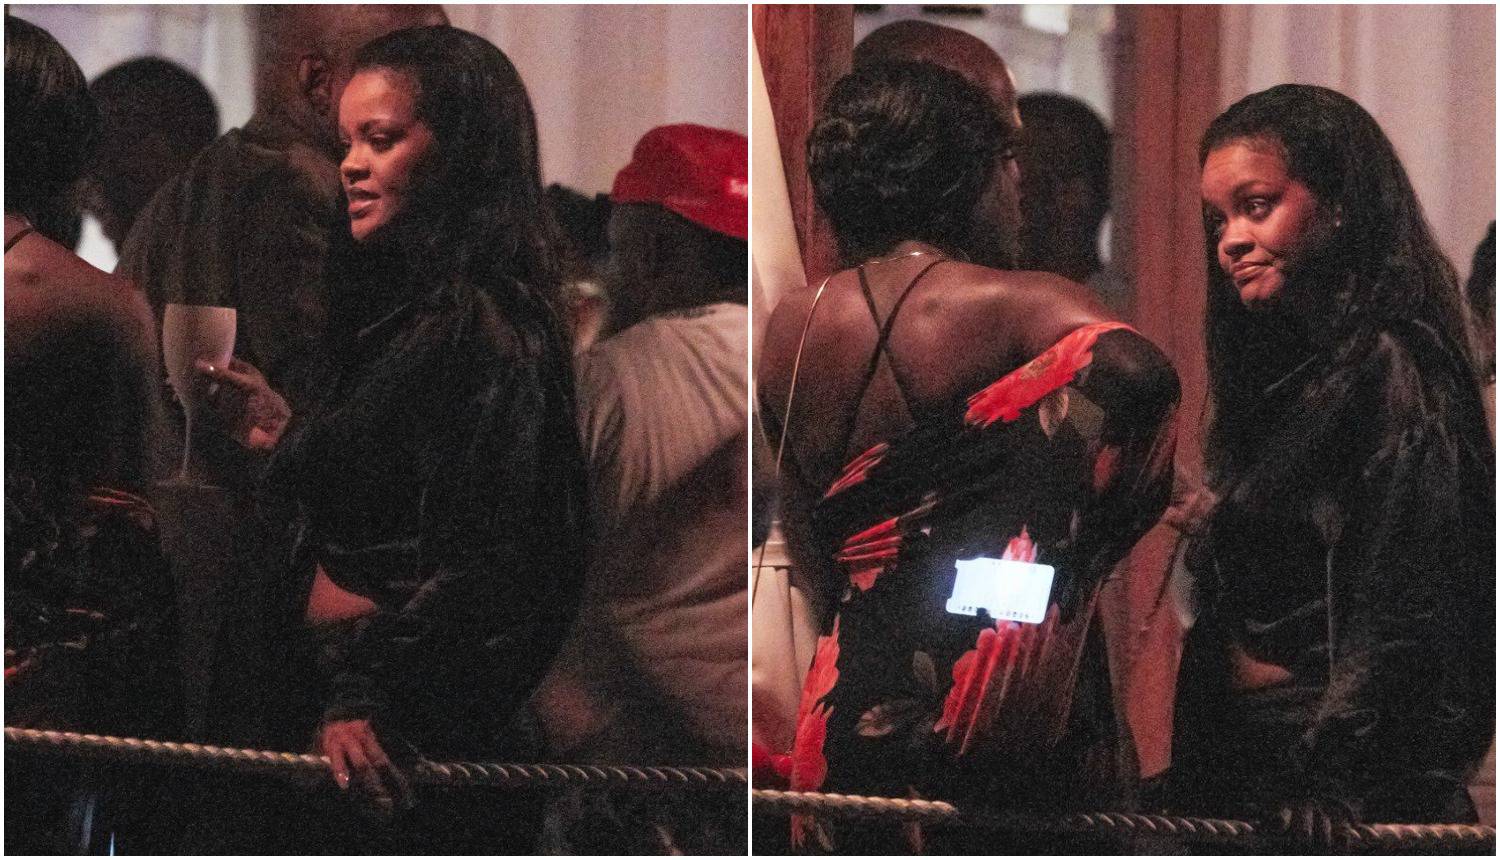 Opustila se: Rihanna na partiju 'opalila' selfi uz čašice alkohola